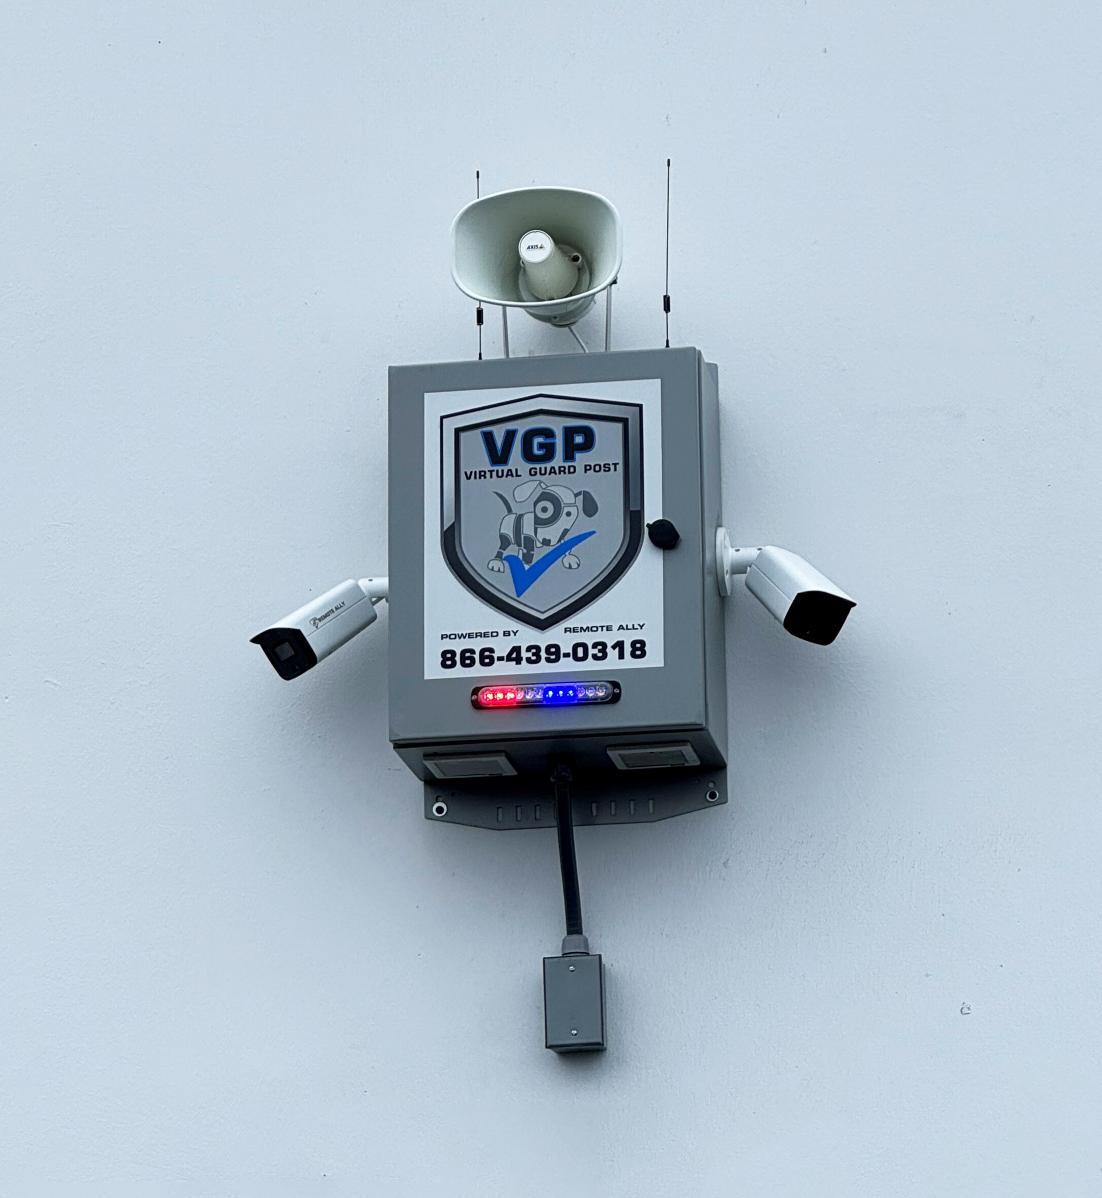 VGP-Patrol